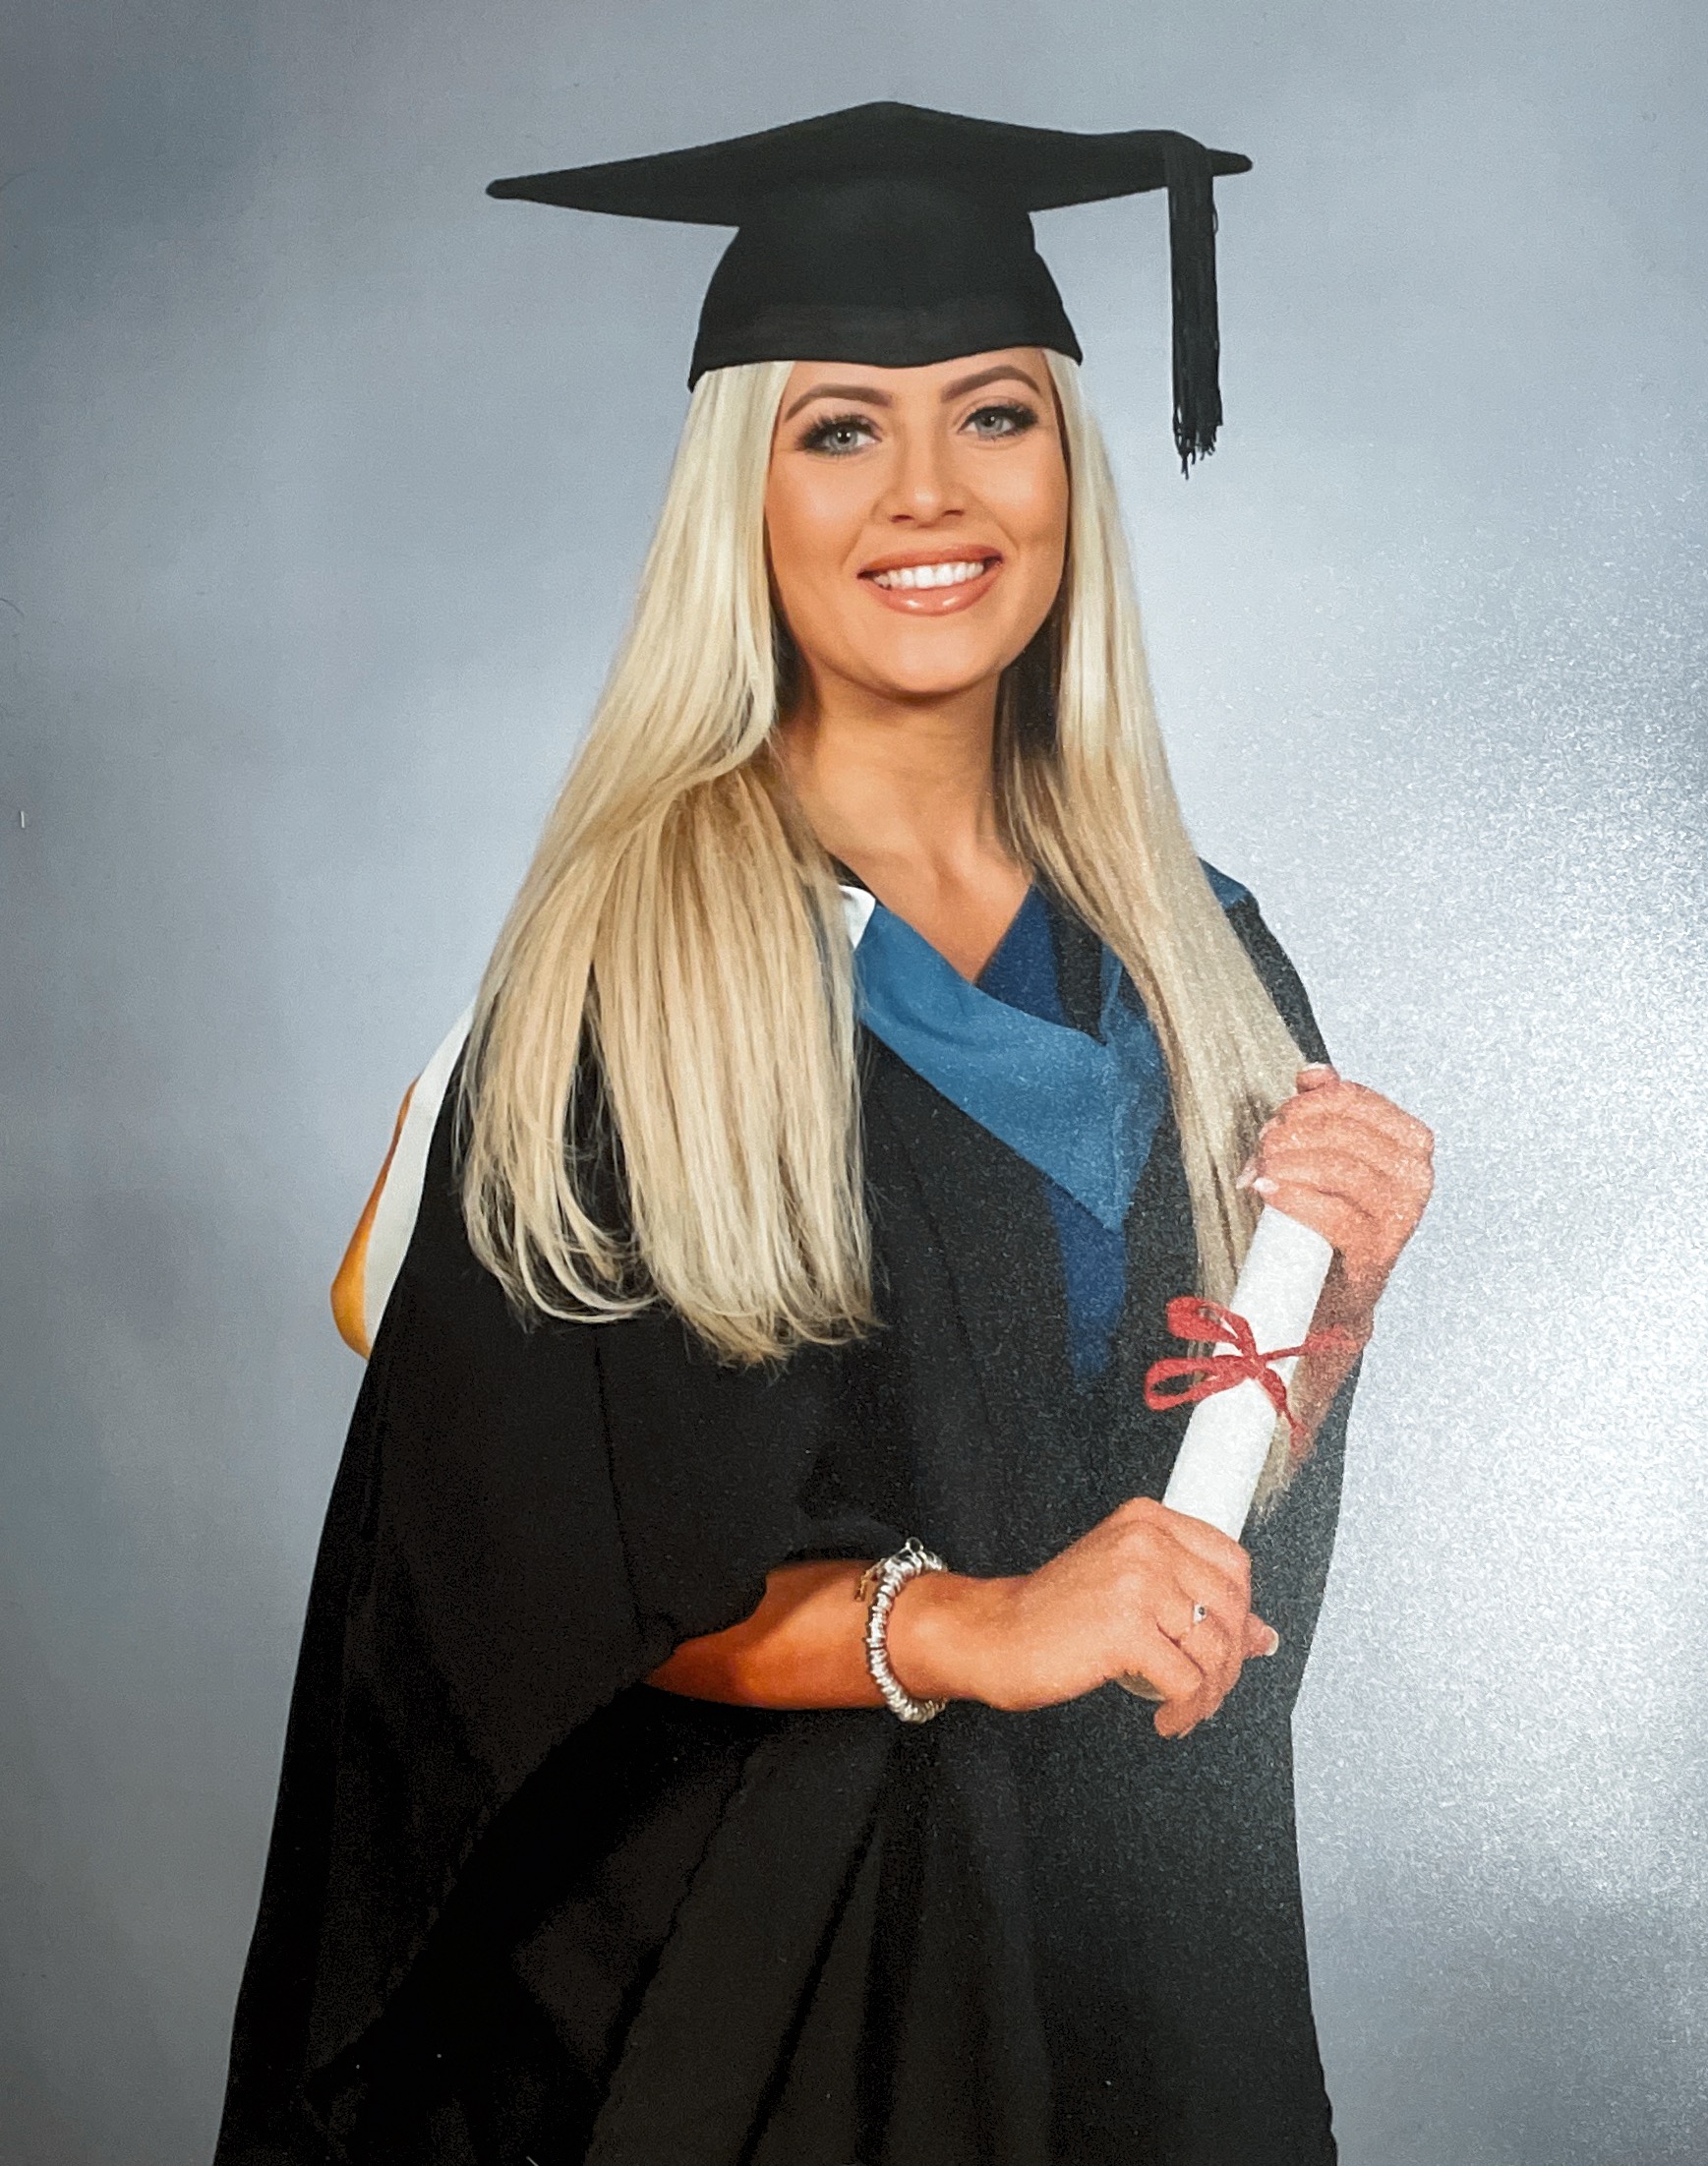 Laura graduation 2018 now a nurse 